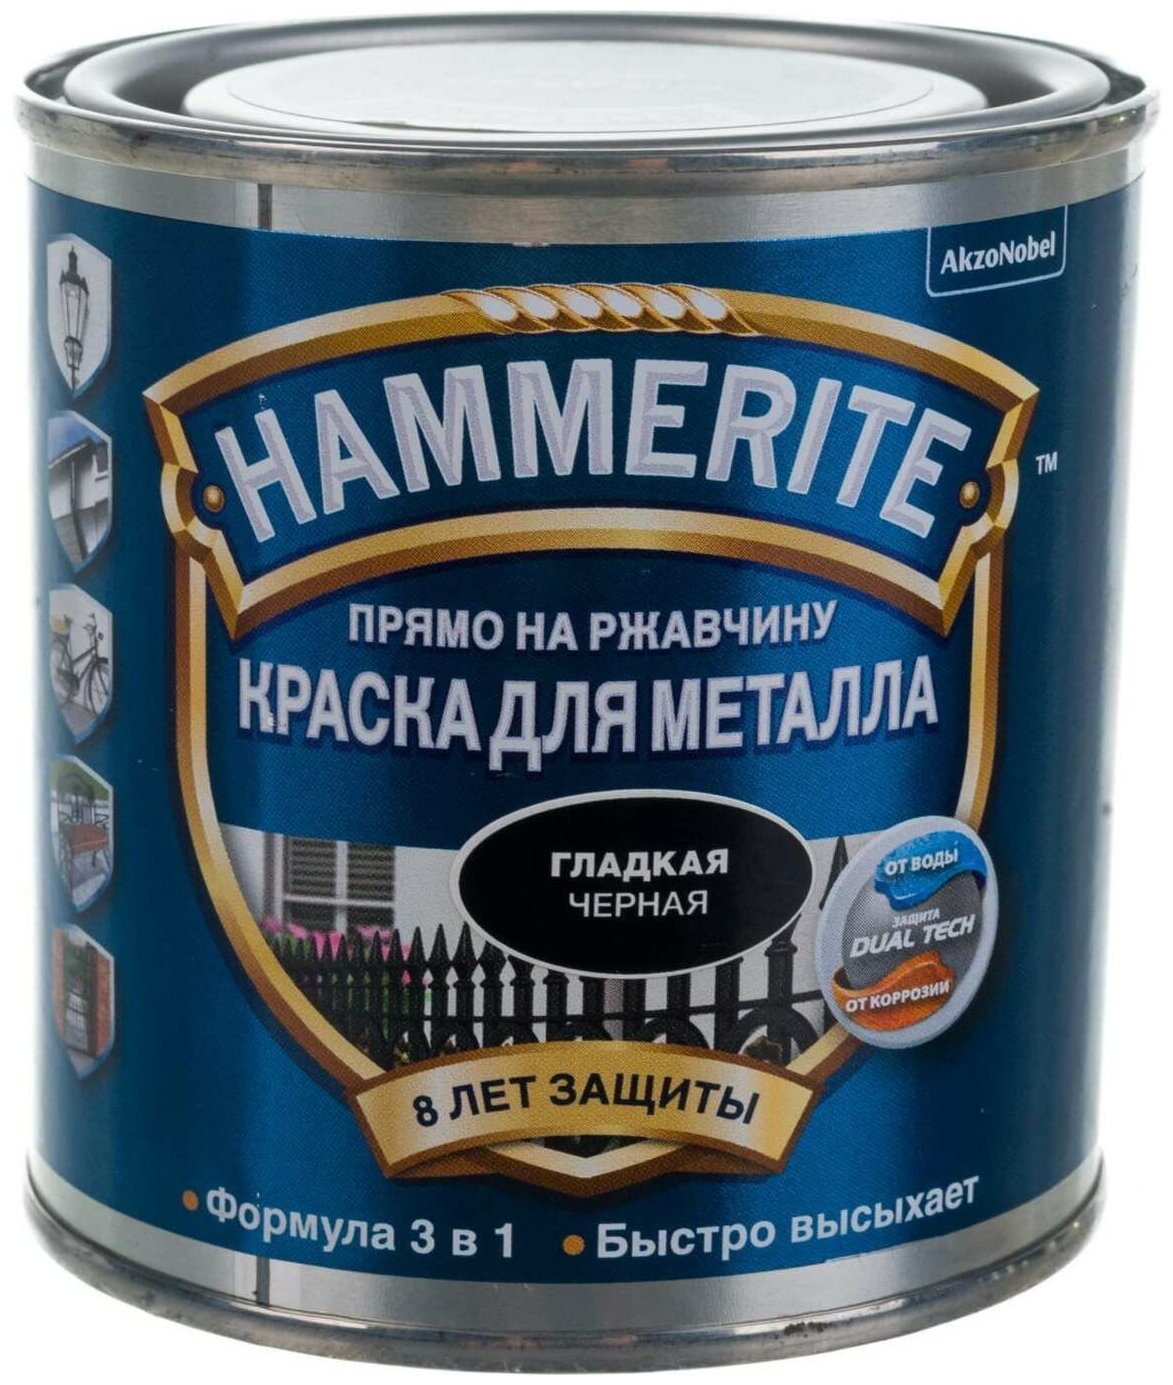 Hammerite rust beater отзывы фото 119